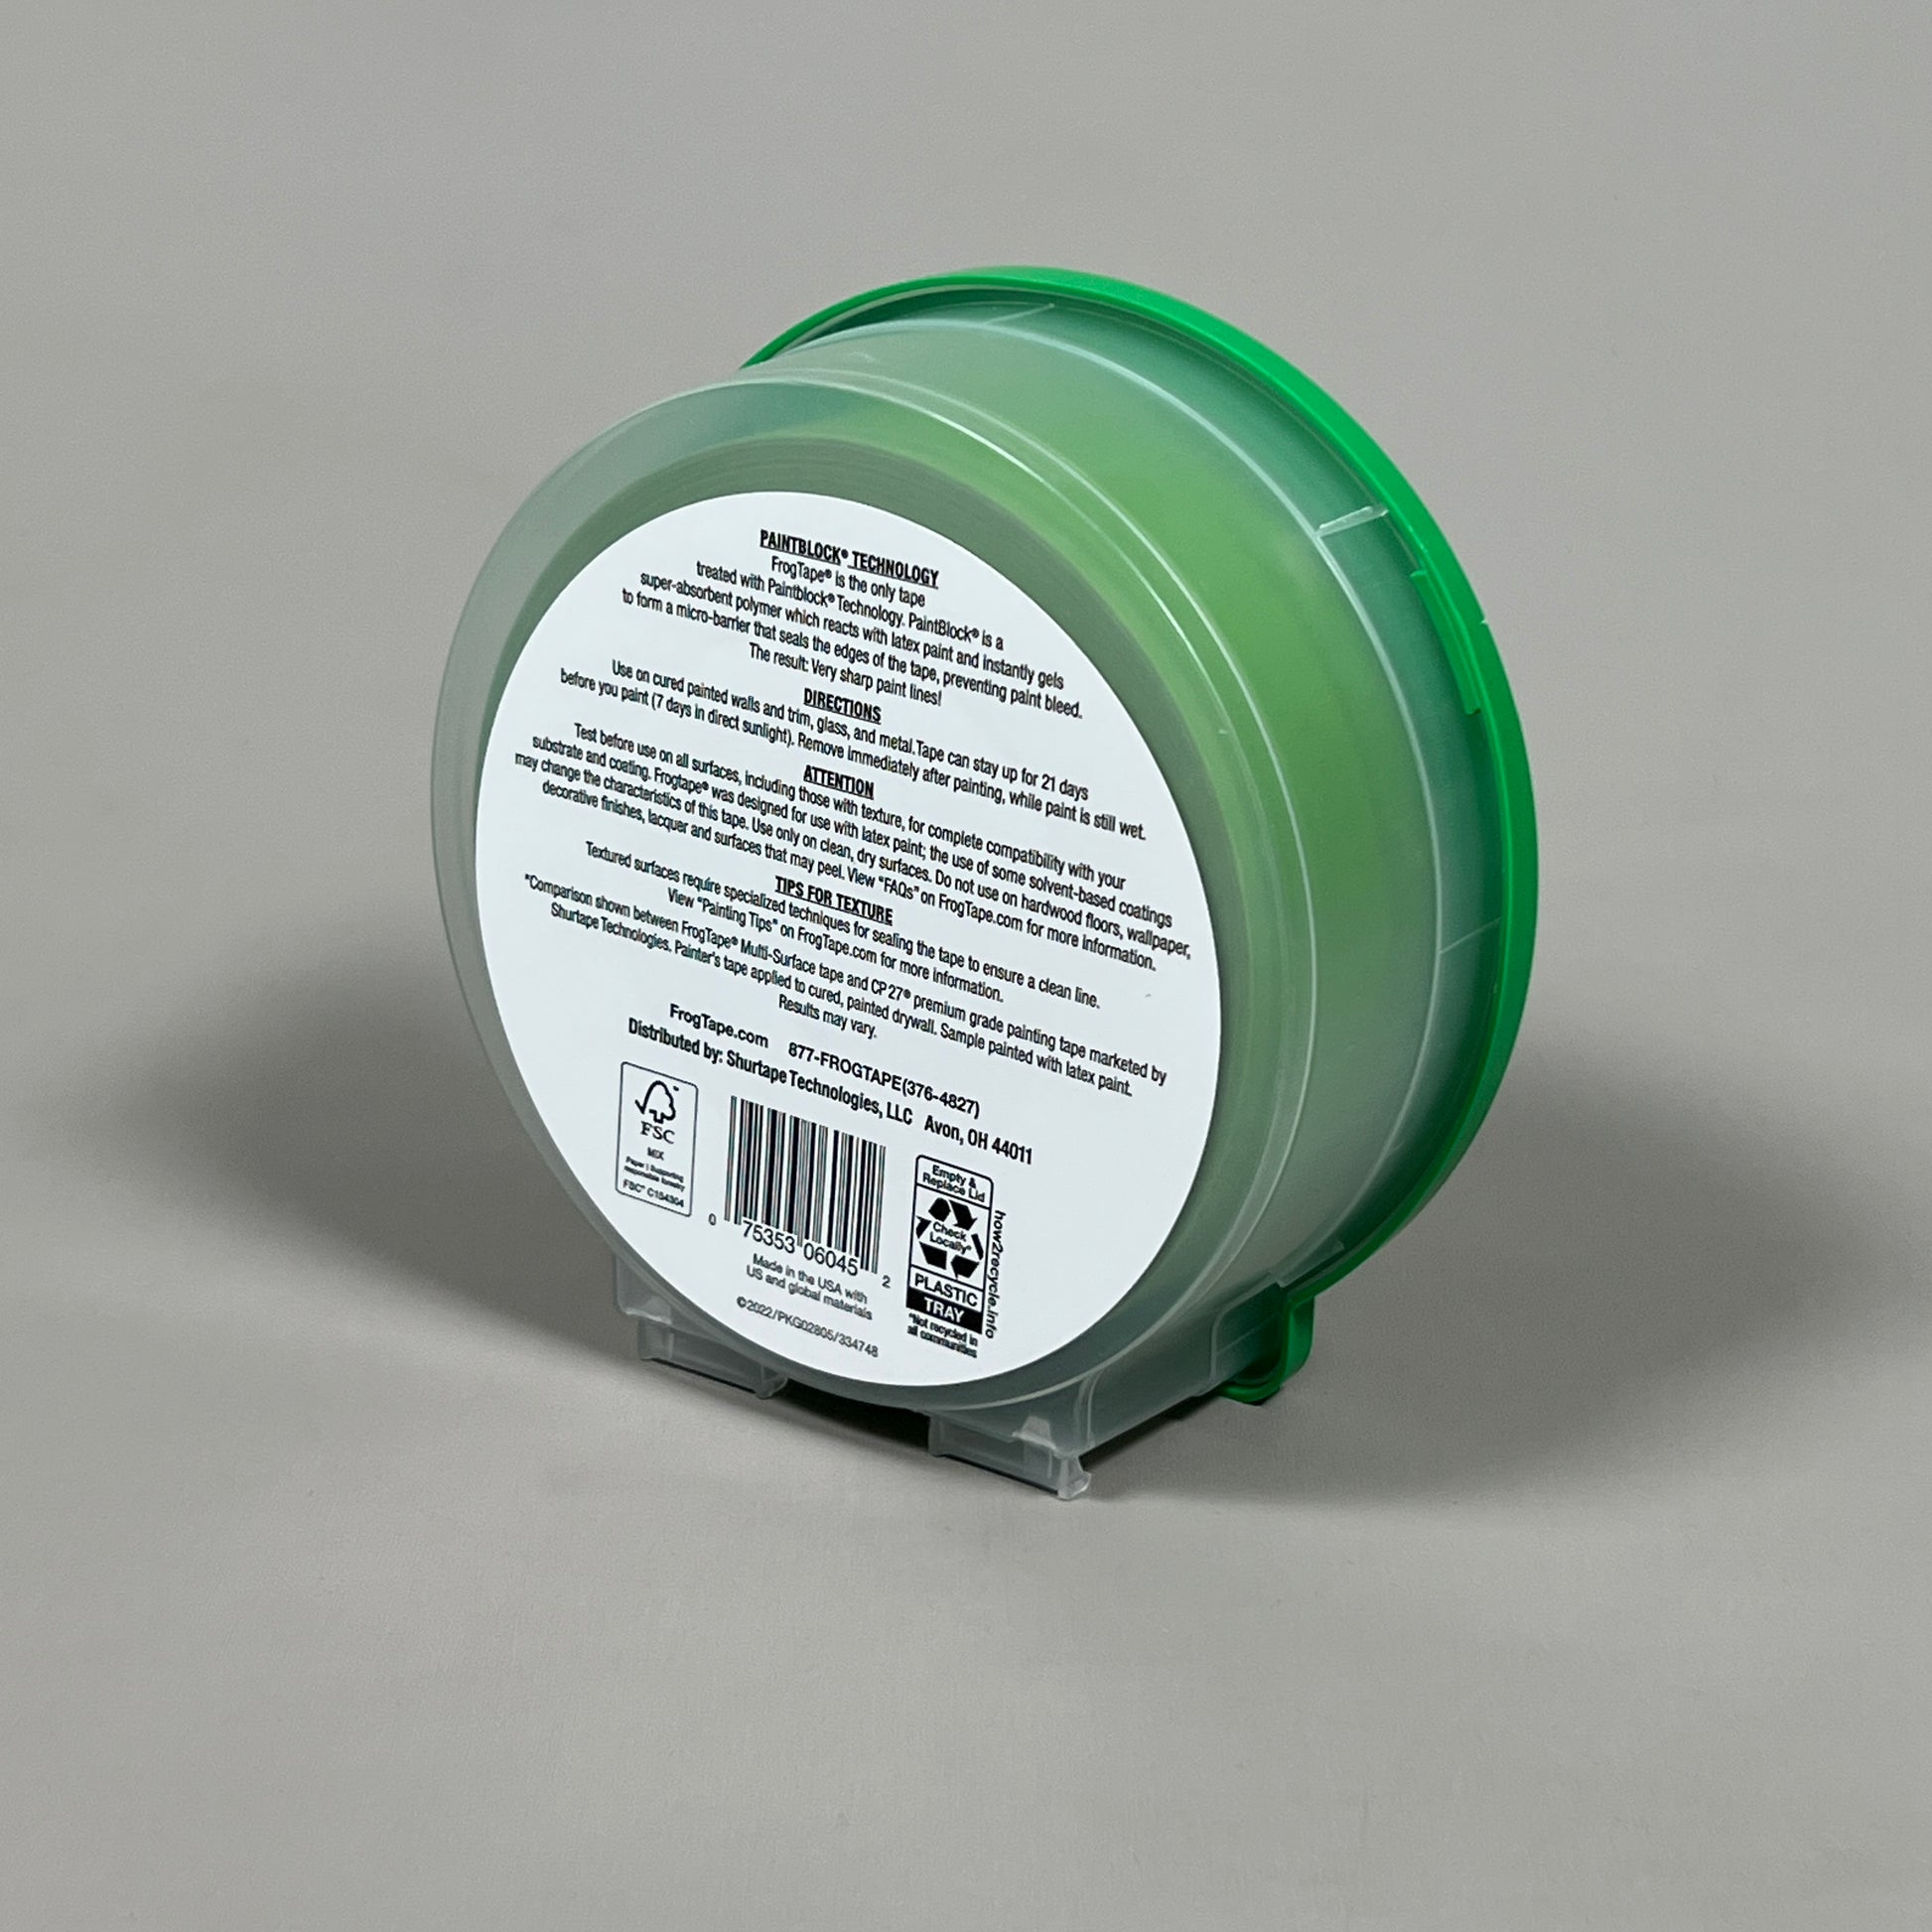 2-PK SHURTAPE FROGTAPE Multi-Surface Masking Tape Green 1.88 in x 60 y –  PayWut